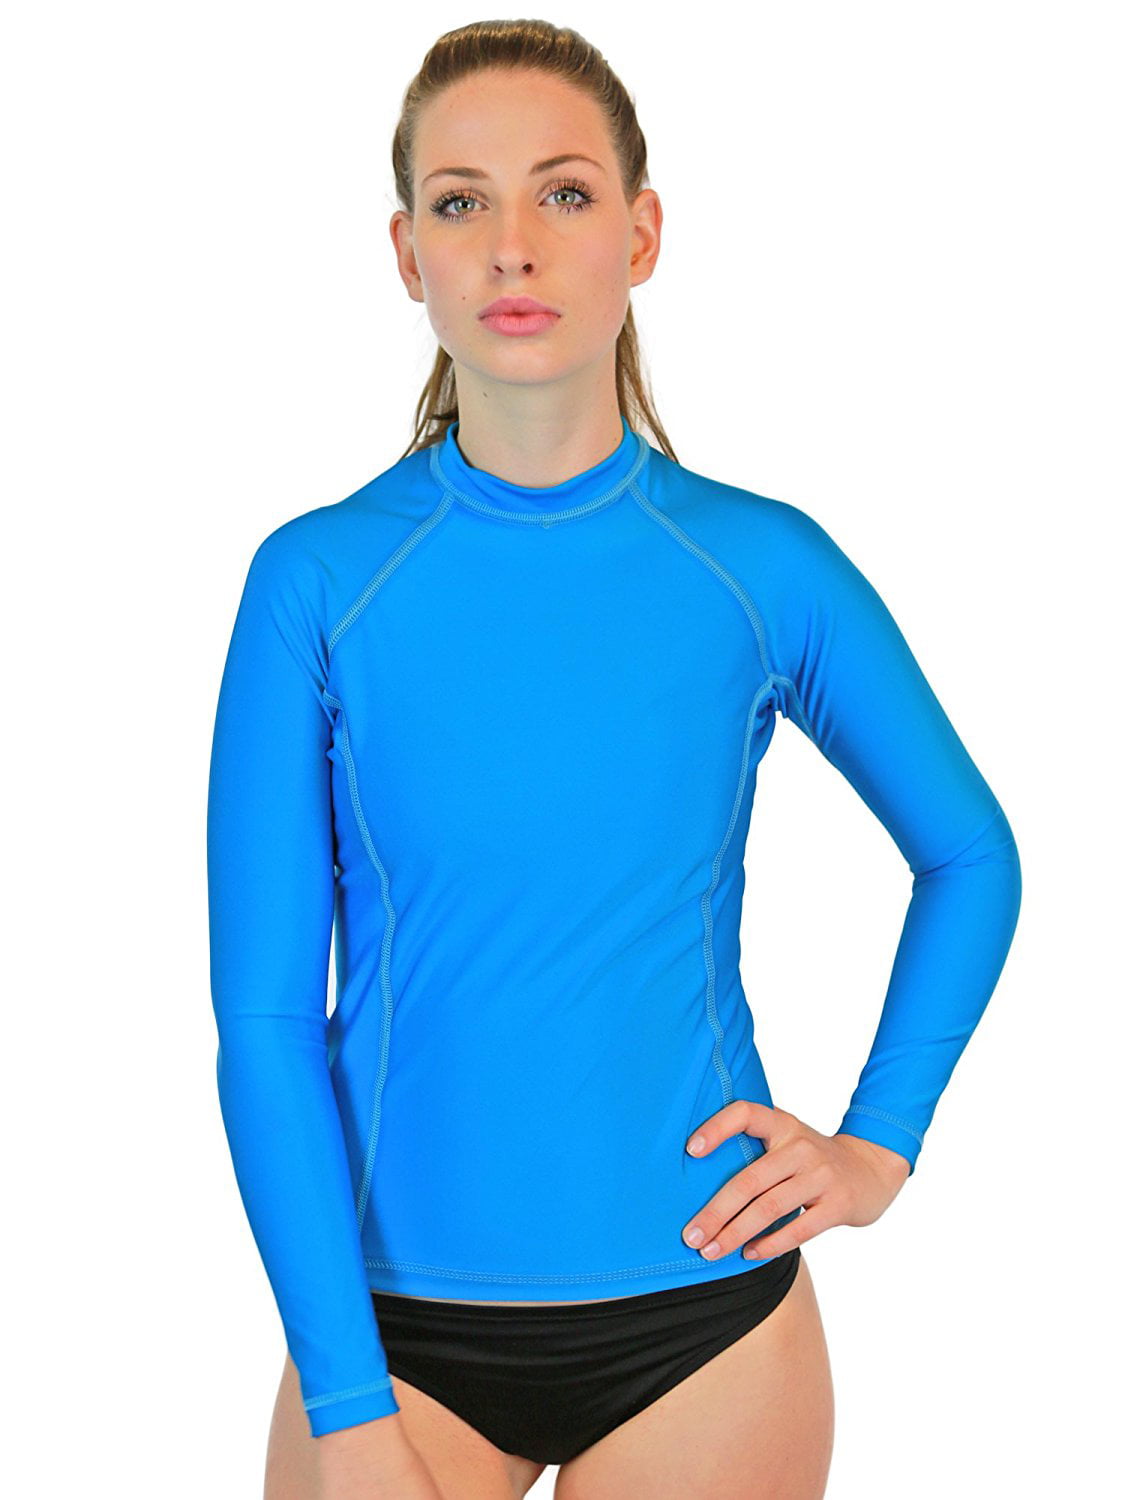 Rash Guard Blue and White Wave Women's Rash Guard Long Sleeved Outdoor UV Protection Shirt